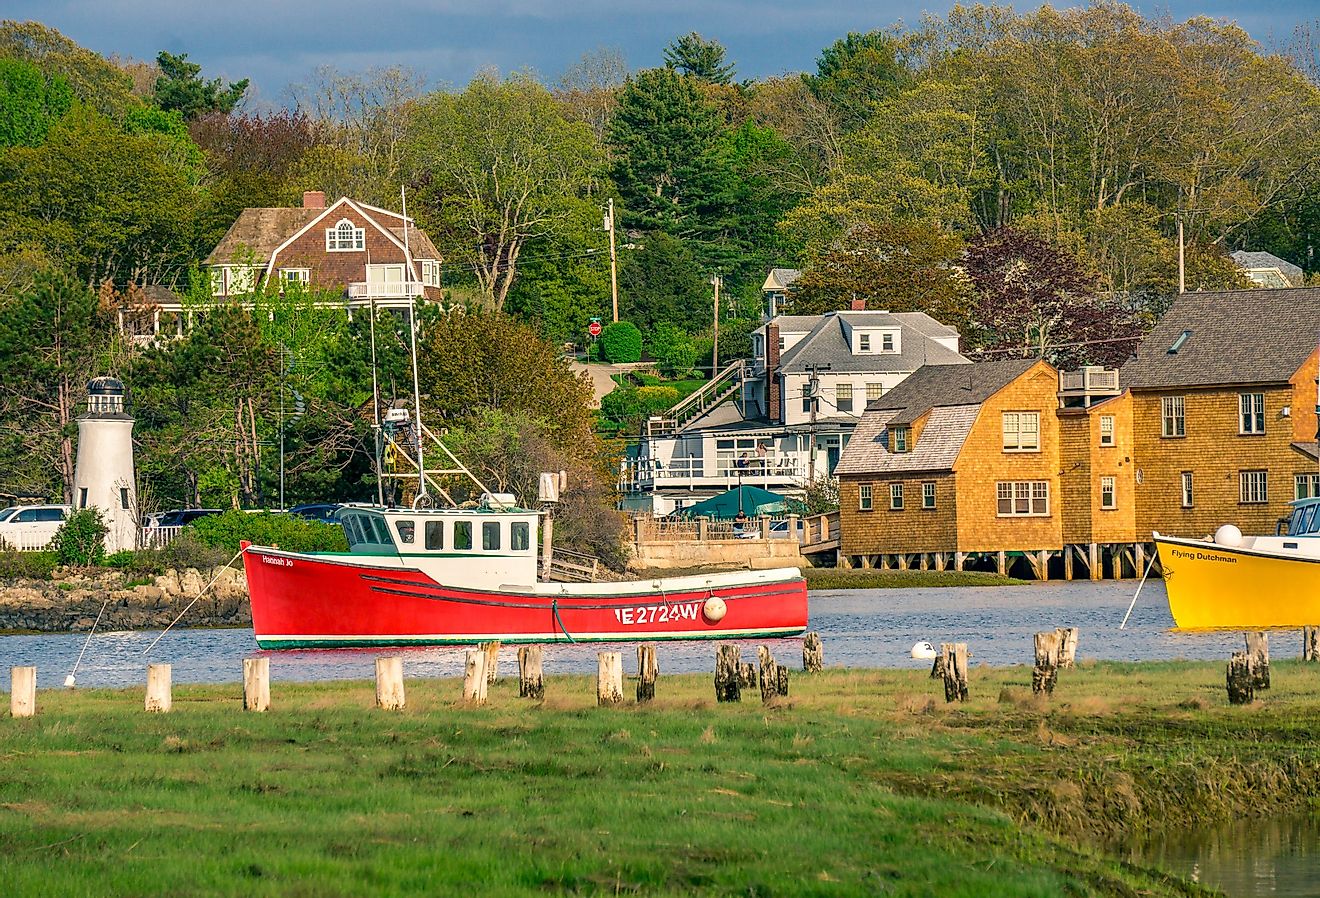 St Anthony's monastery garden on Kennebunkport's harbor, Maine. Image credit Pernelle Voyage via Shutterstock